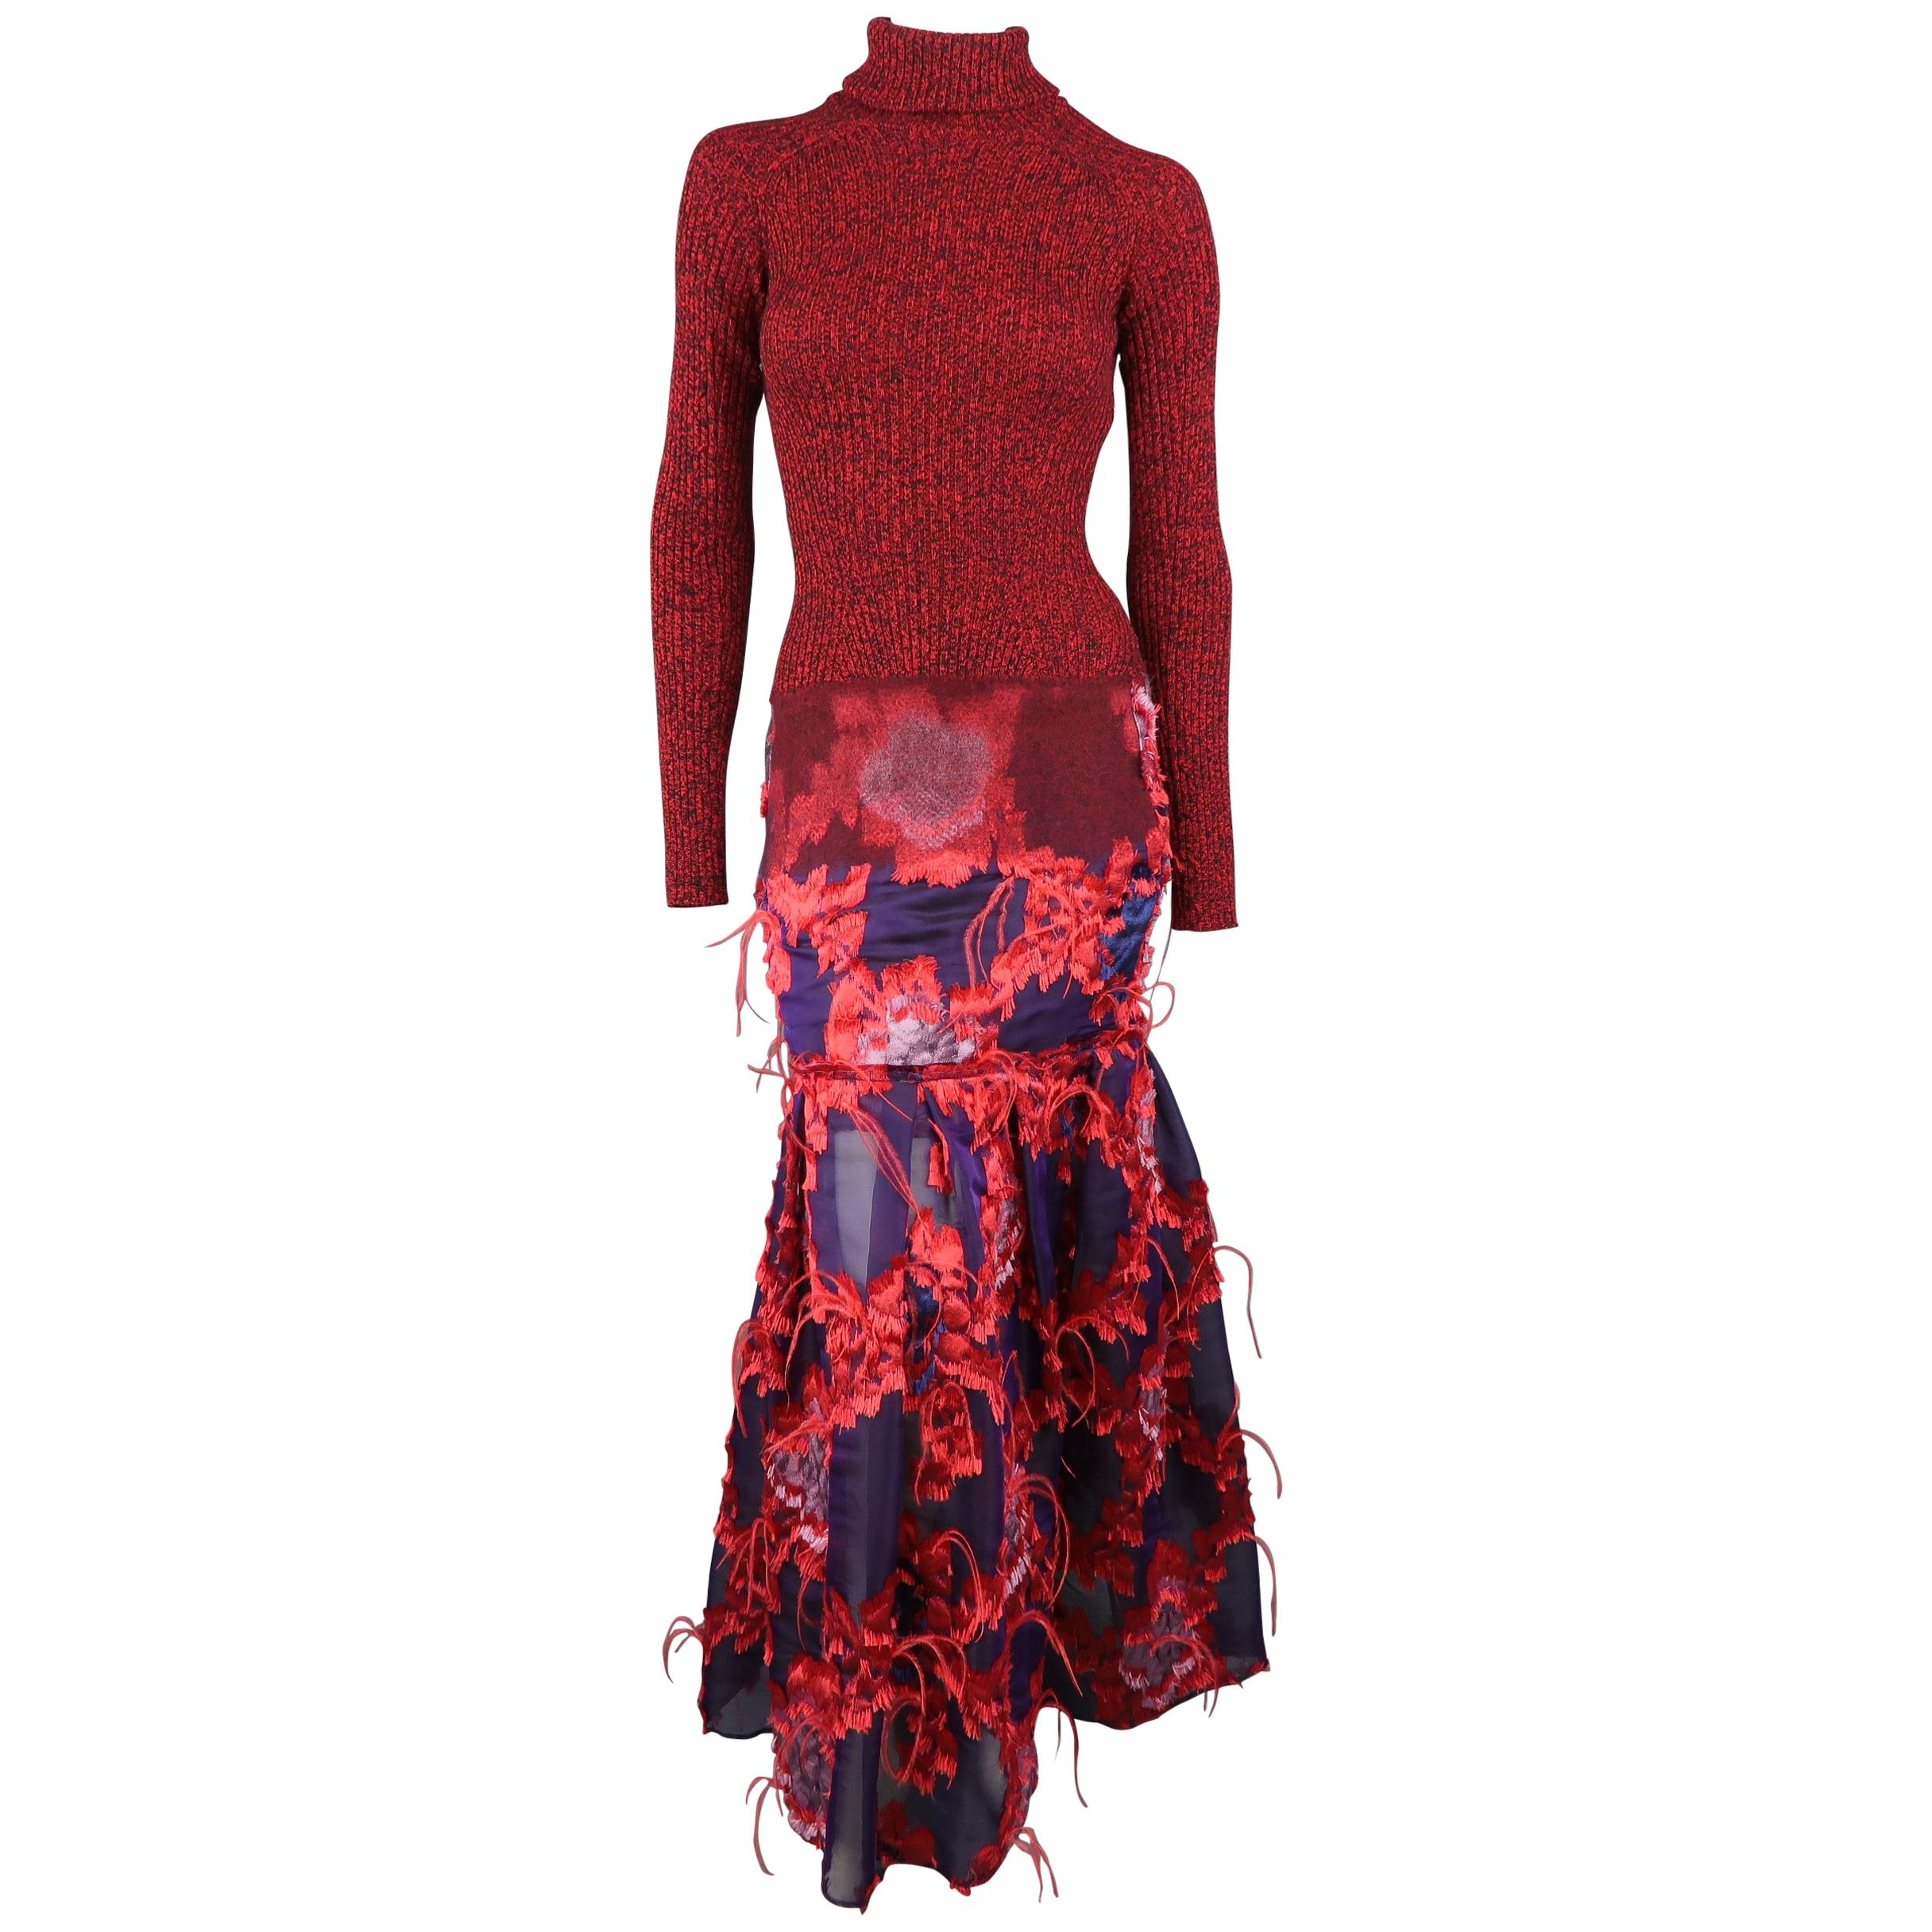 ERDEM Gown - Fall 2015 Runway - Red, Purple, Knit, Taffeta Feather Evening Dress